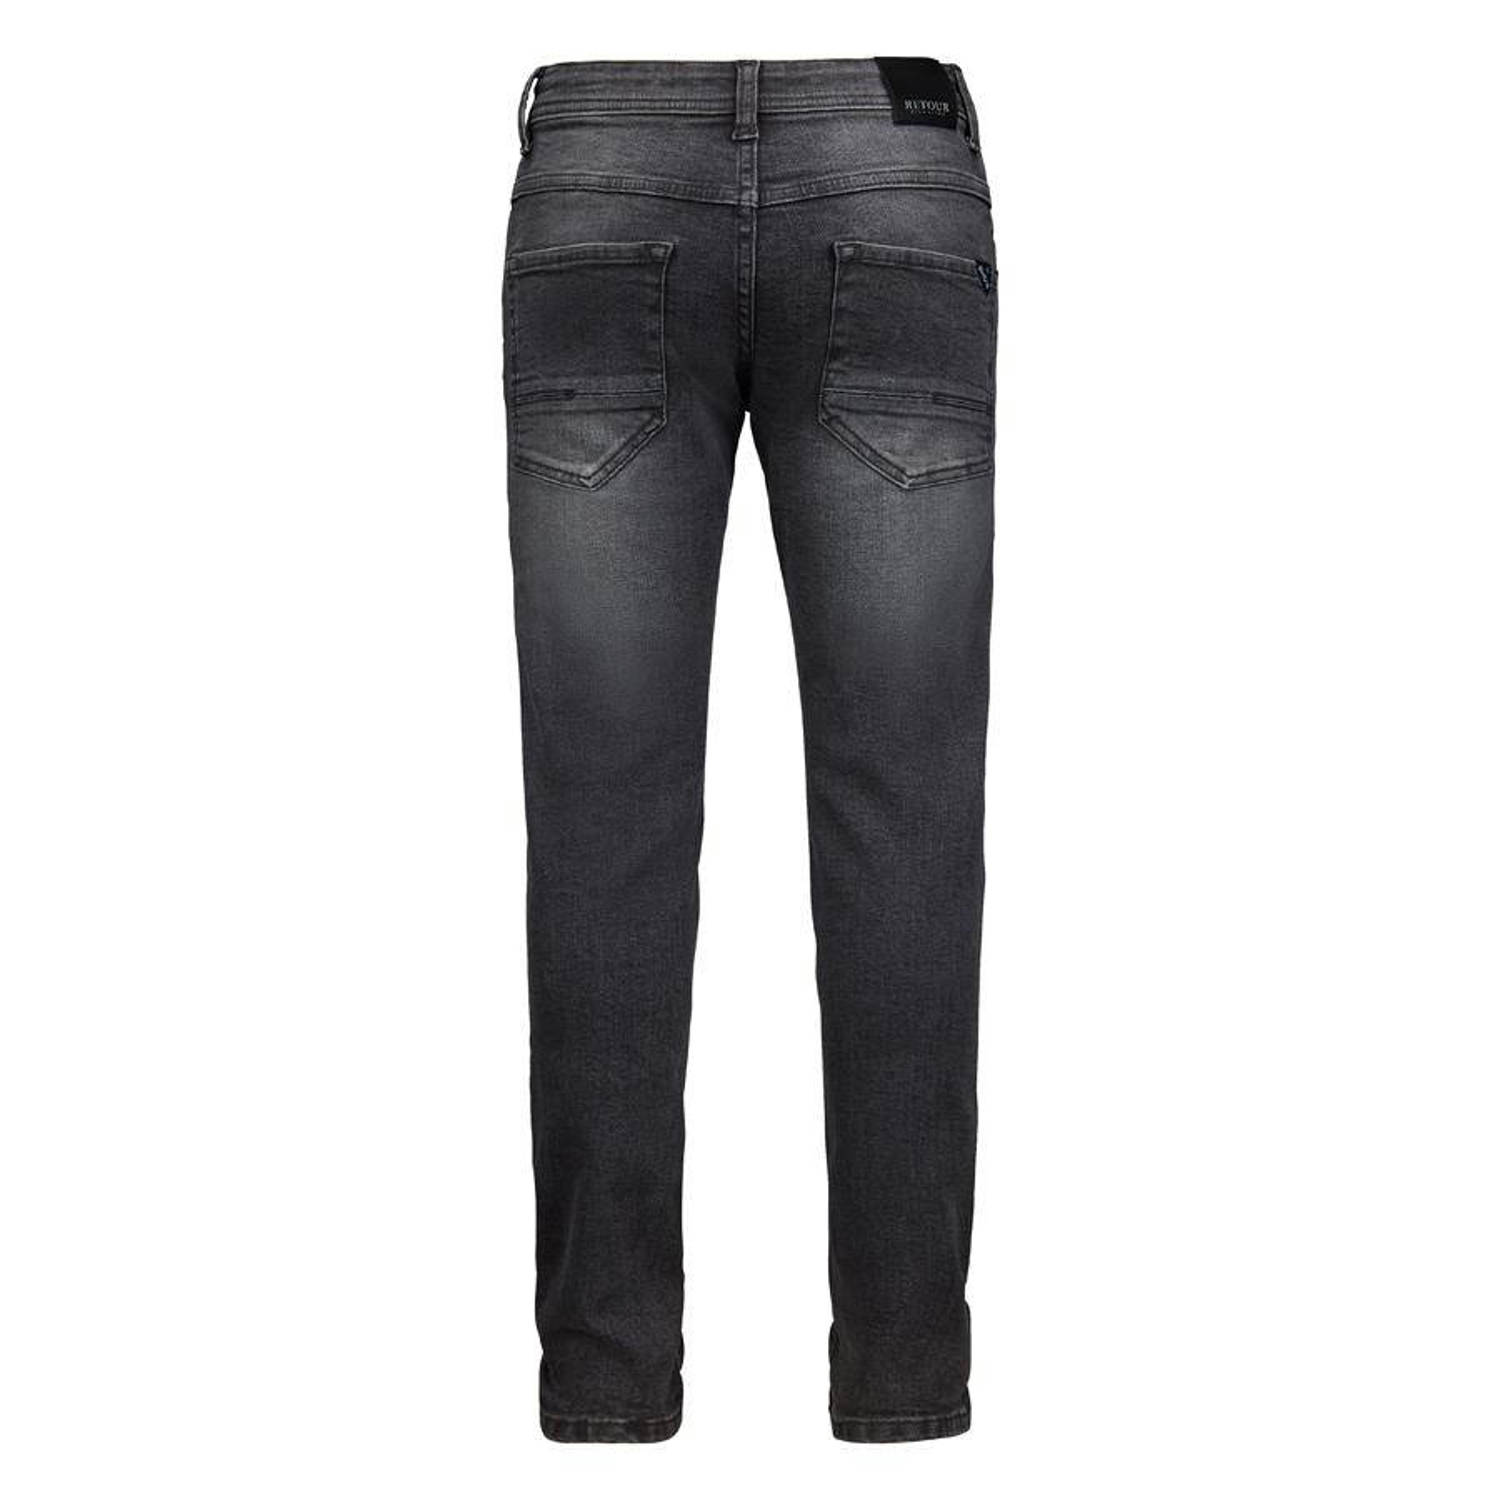 Retour Jeans skinny fit jeans Sivar medium grey denim